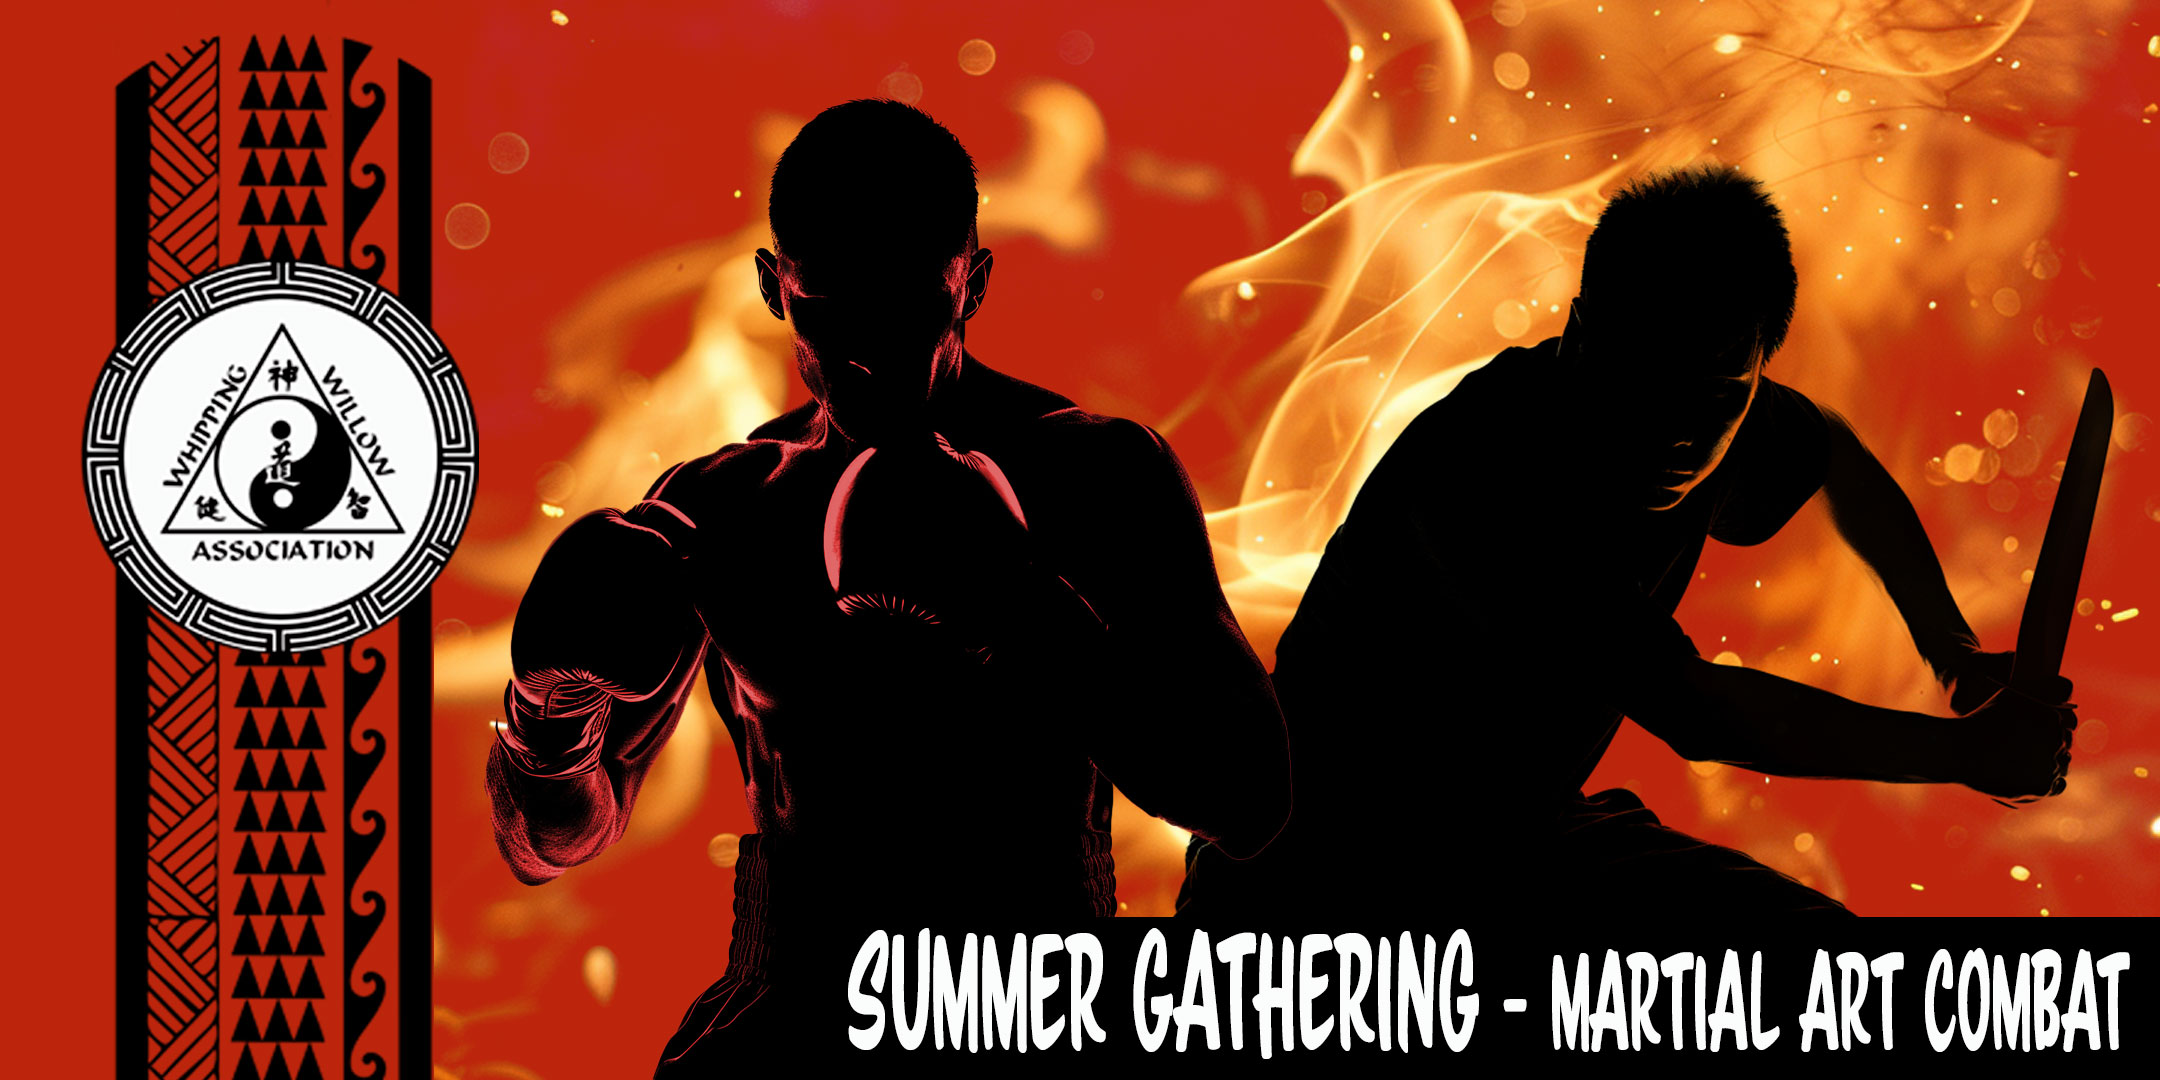 Summer Gathering - Martial Art Combat Poster.